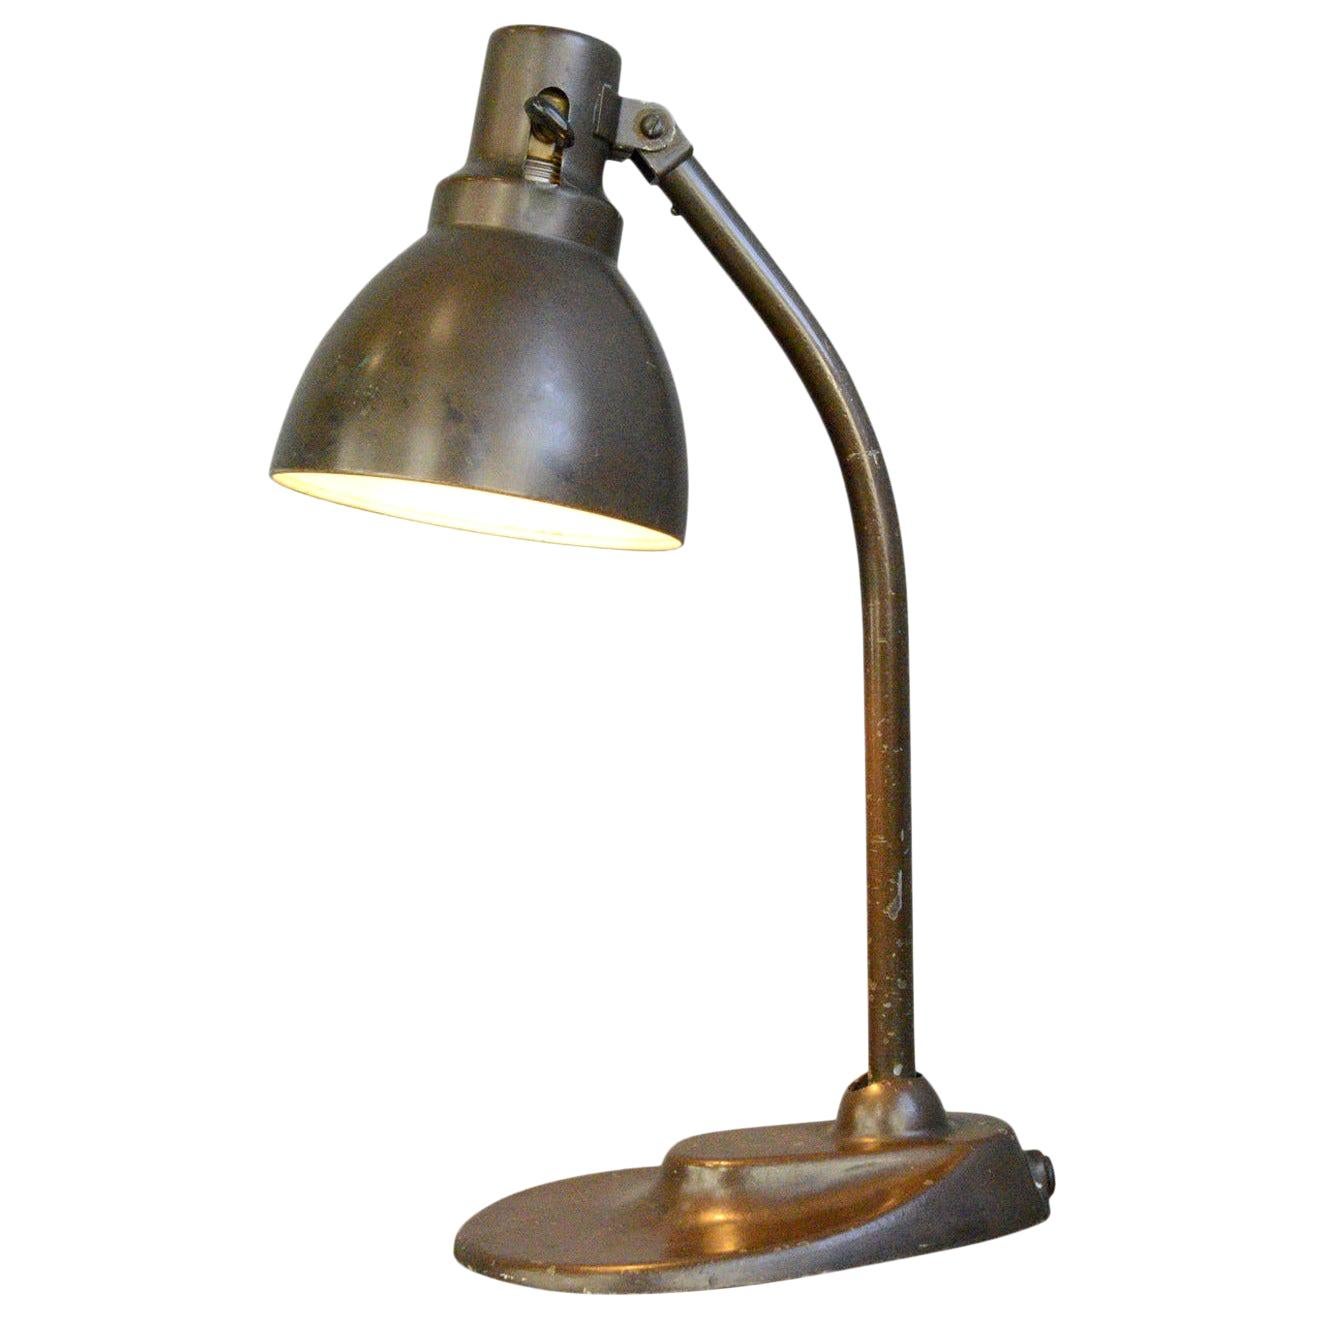 Kandem Model 701 Table Lamp, circa 1920s